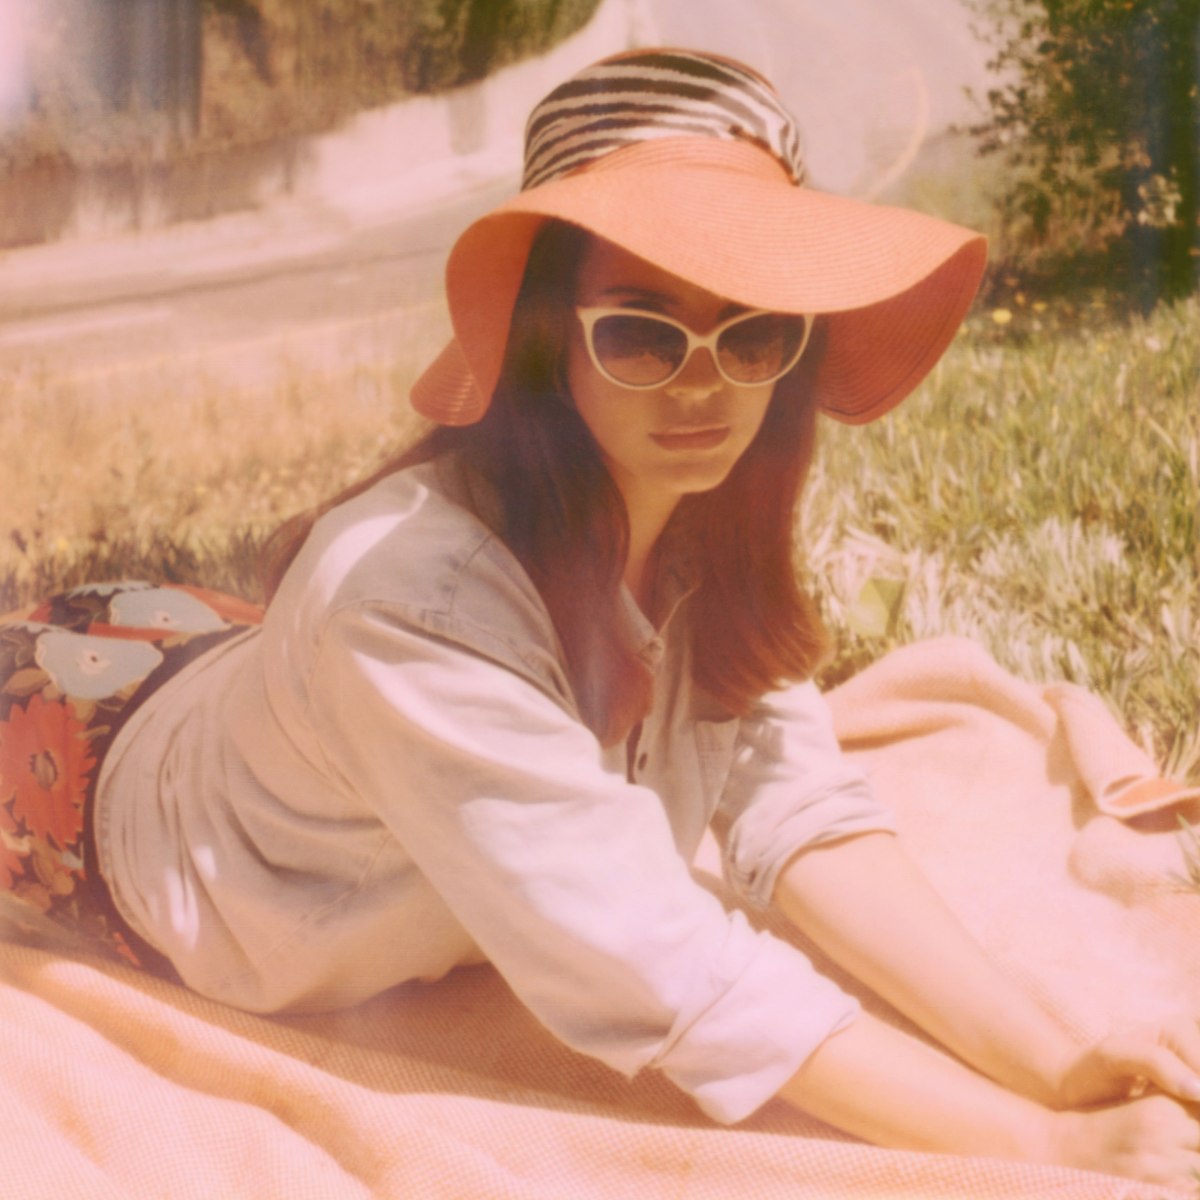 Lana Del Rey: “Love” – REVIEW